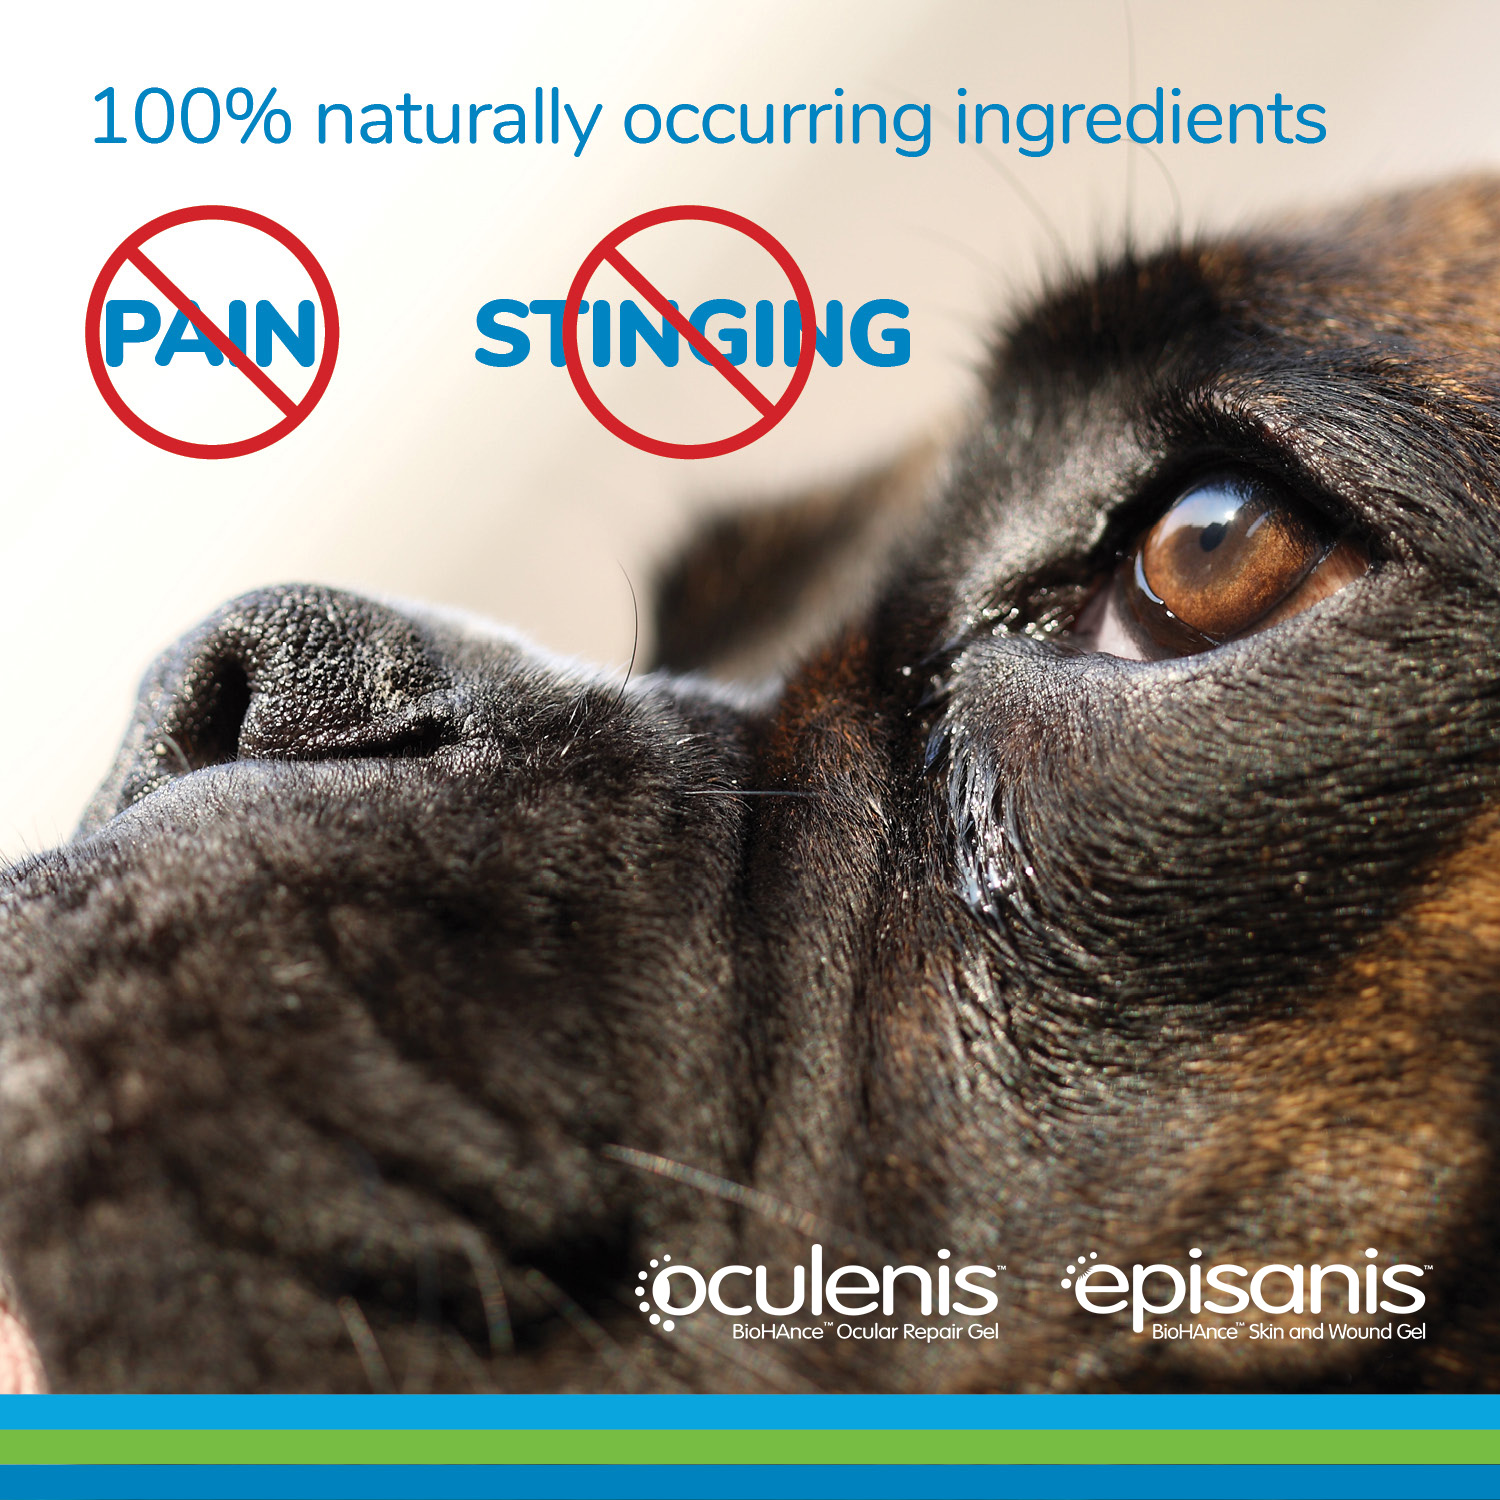 100% naturally occurring ingredients. No pain. No Stinging. Episanis. Ocunovis.